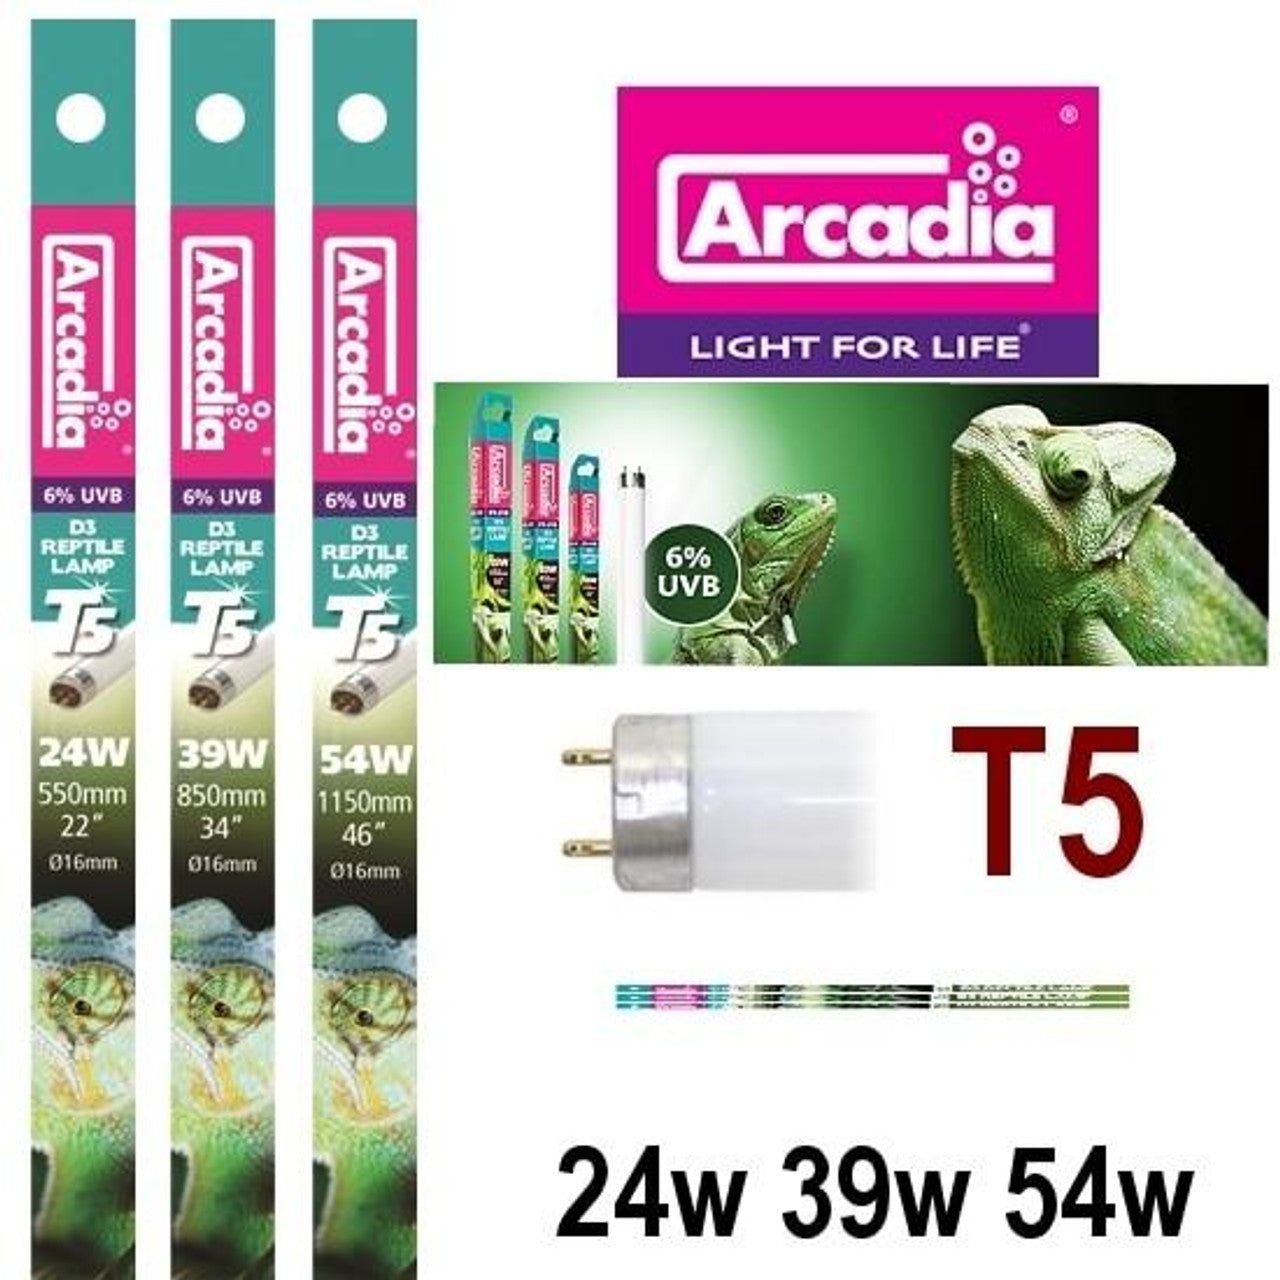 Arcadia 24w T5 D3+ 6% UVB 22"